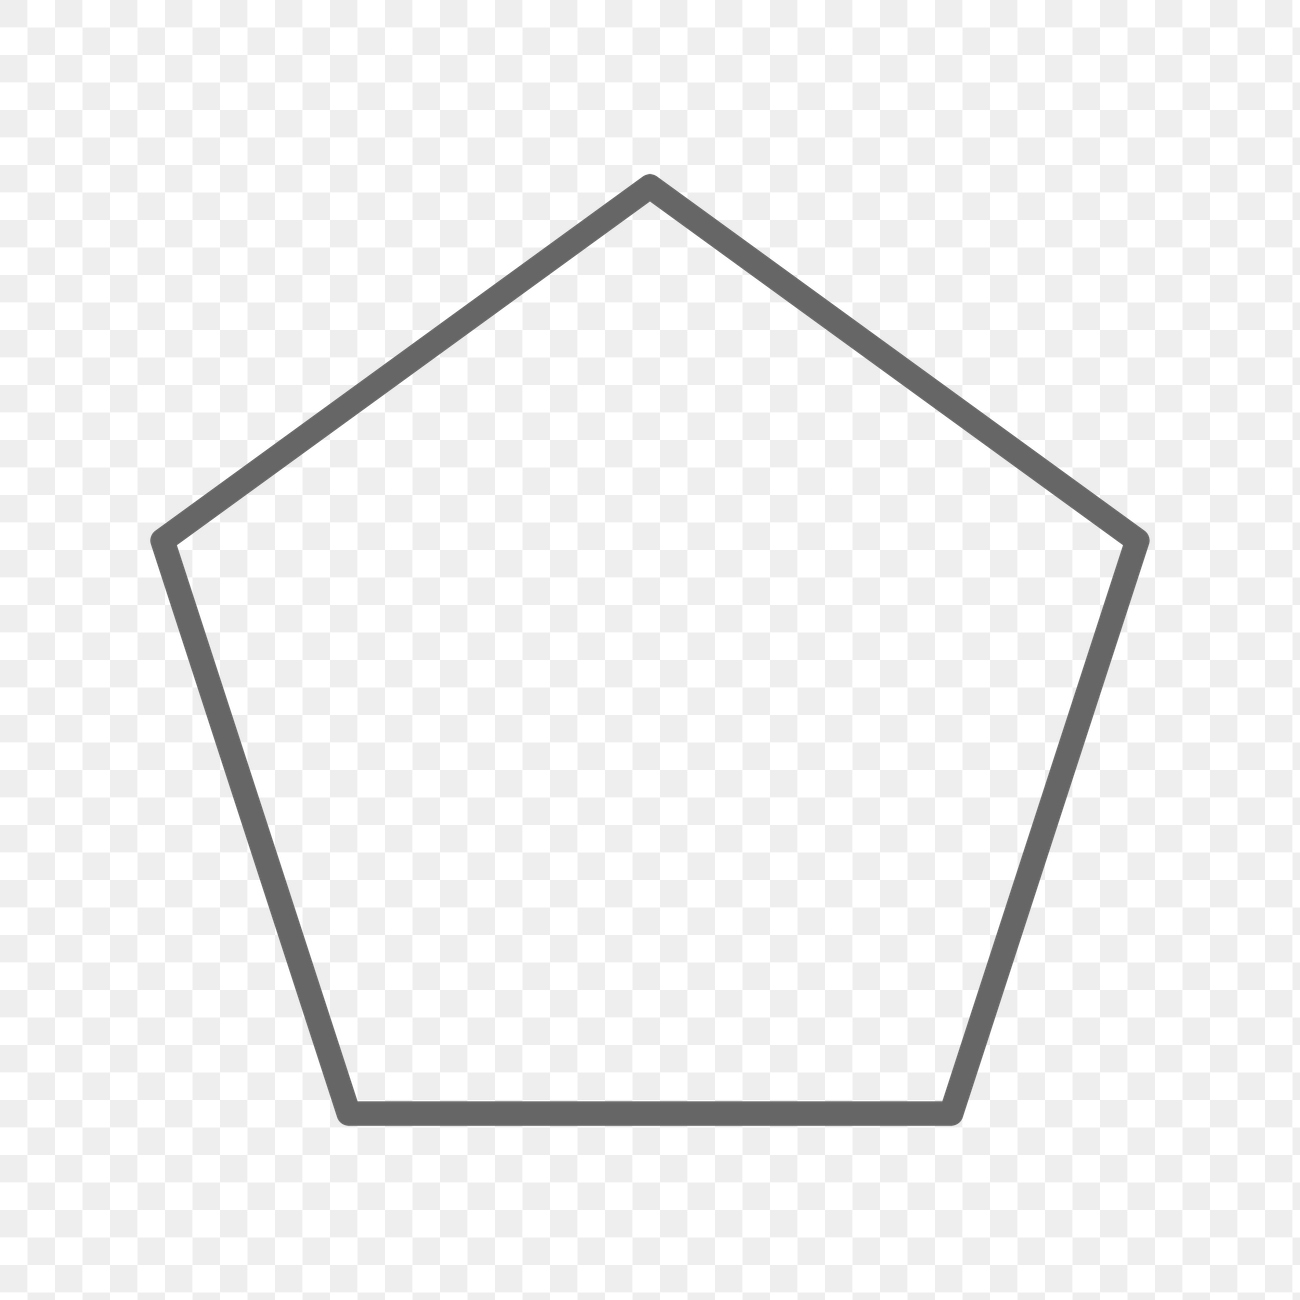 Basic geometric shape png | Free stock illustration | High Resolution